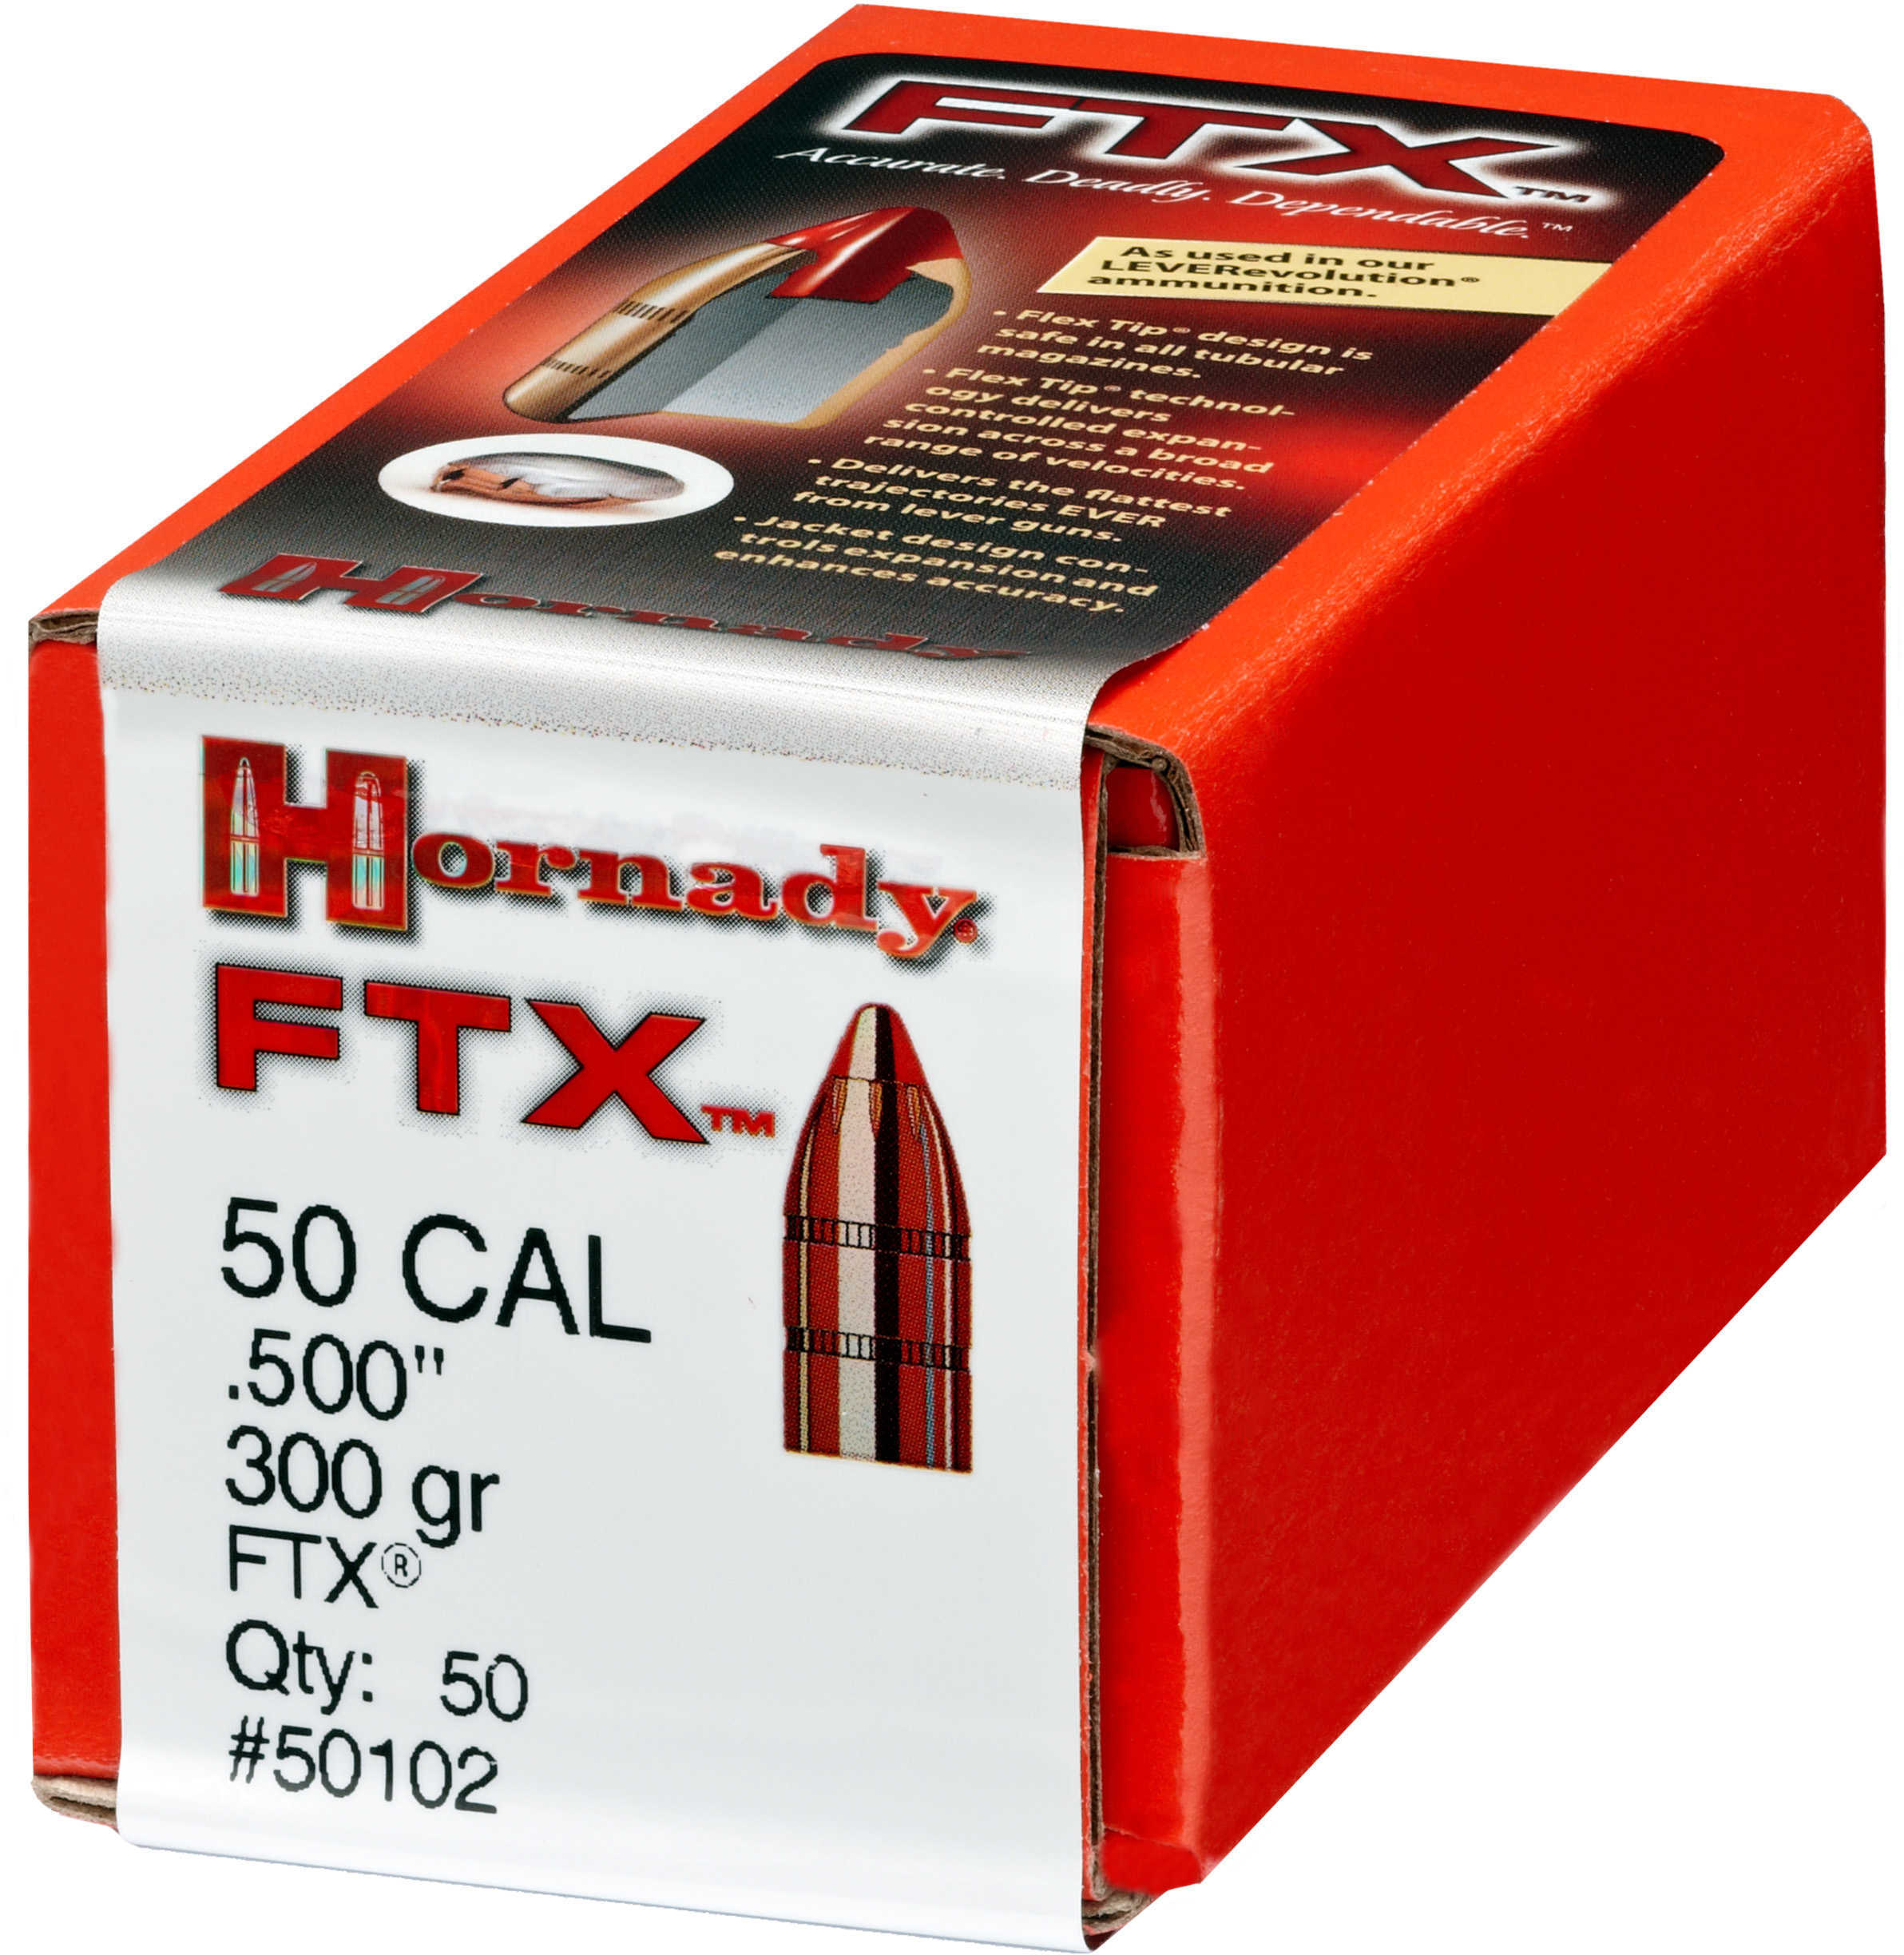 Hornady 50 Caliber 300 Grain .500" FTX 50/25 Bullets